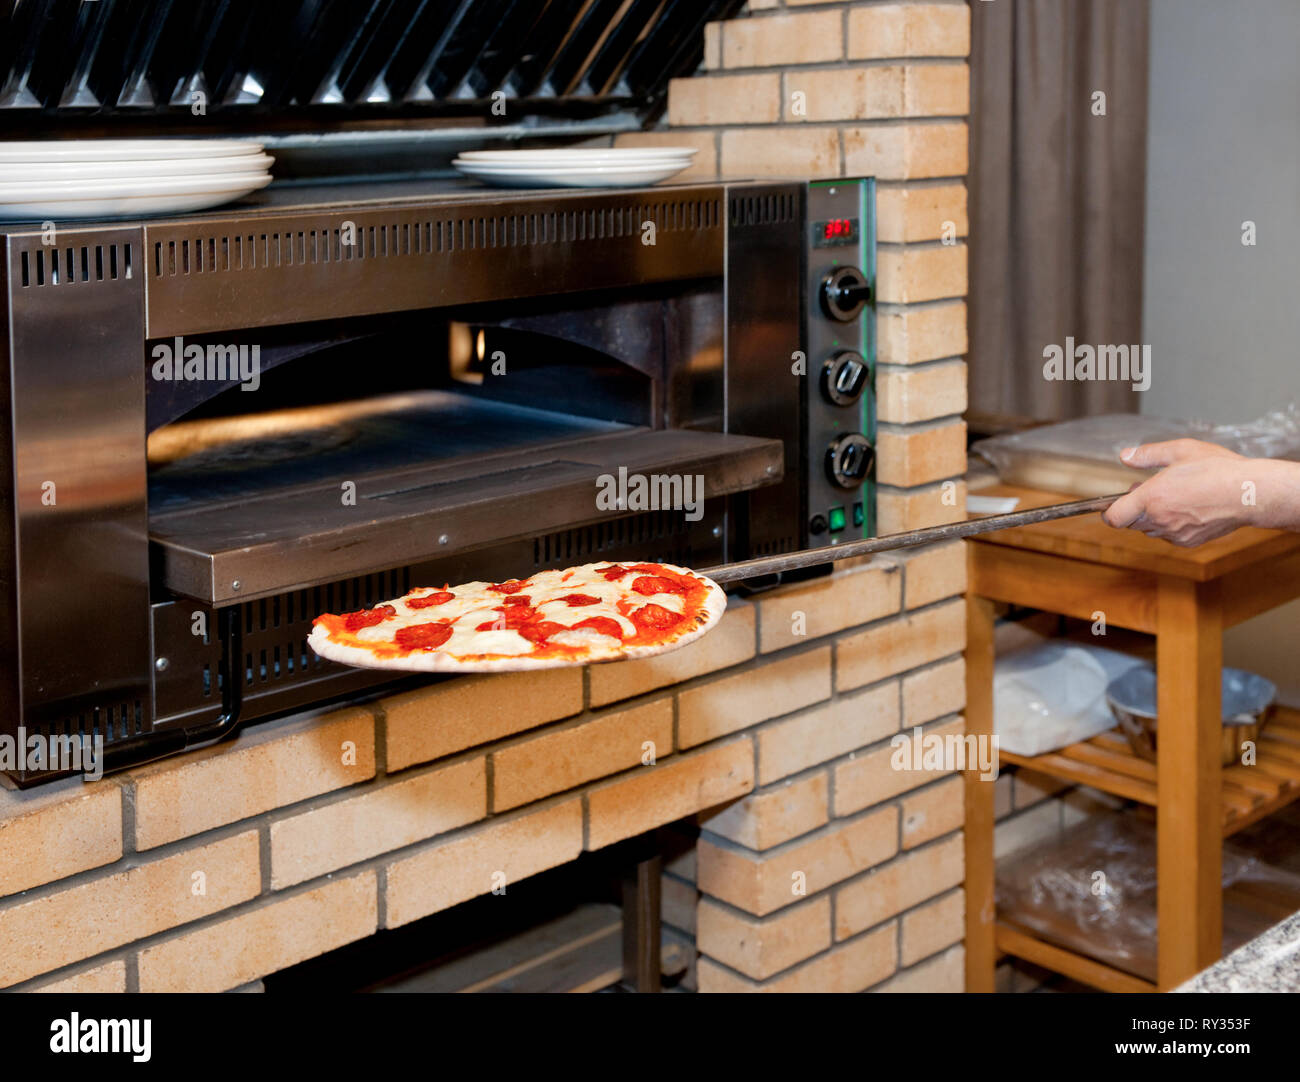 Man inserting pizza in oven, reataurant kitchen Stock Photo